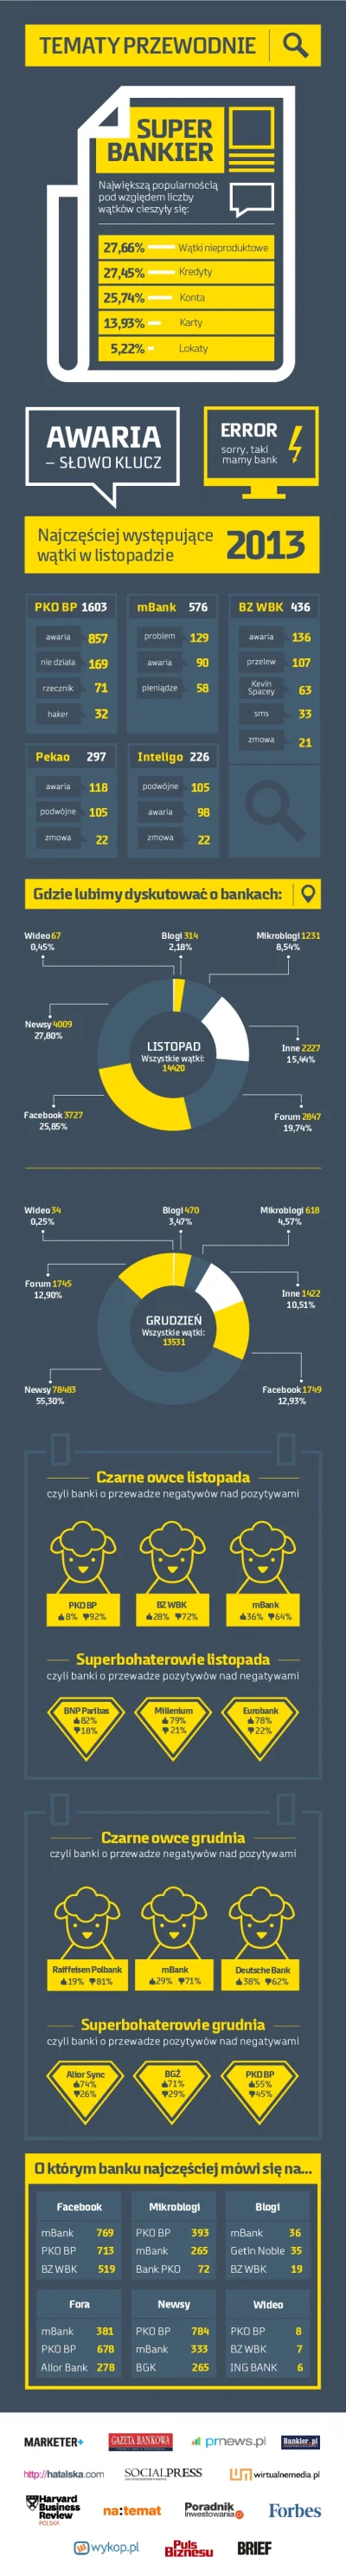 DeesQ - Fajna infografika, nawet mirko jest ( ͡° ͜ʖ ͡°)



#banki #finanse #internauc...